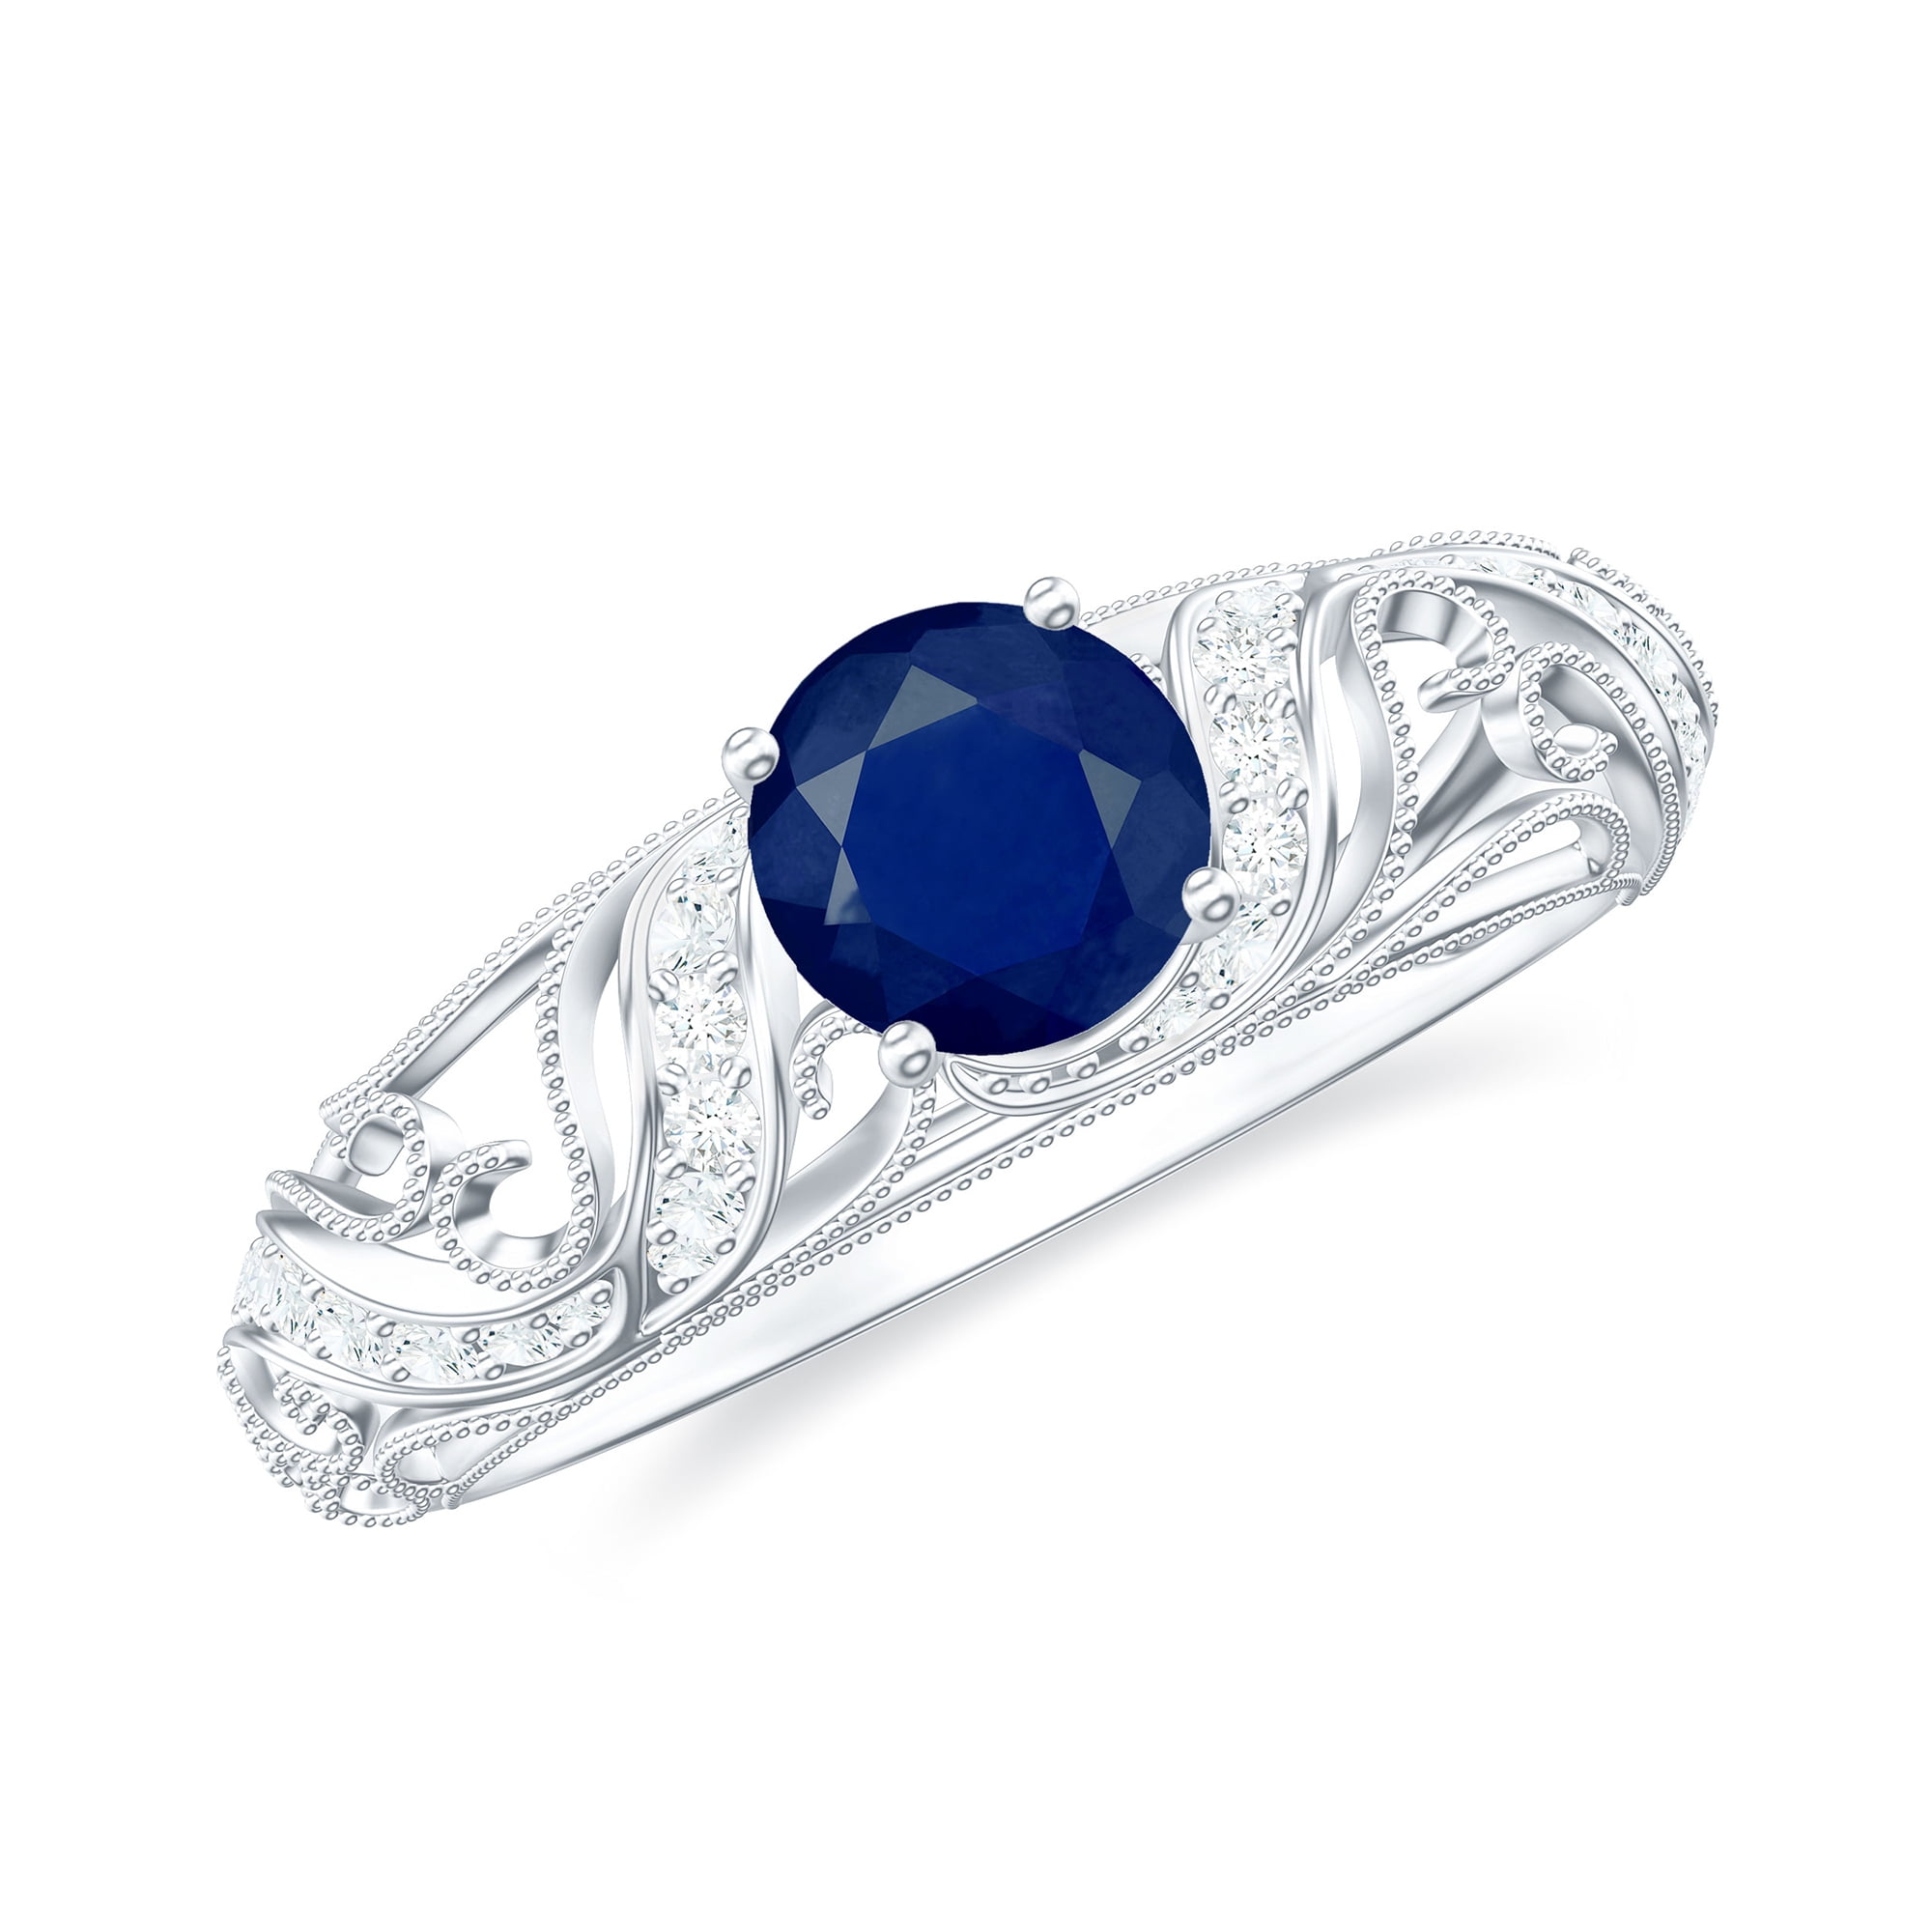 Panchdhatu bule sapphire ring | Neelam ring